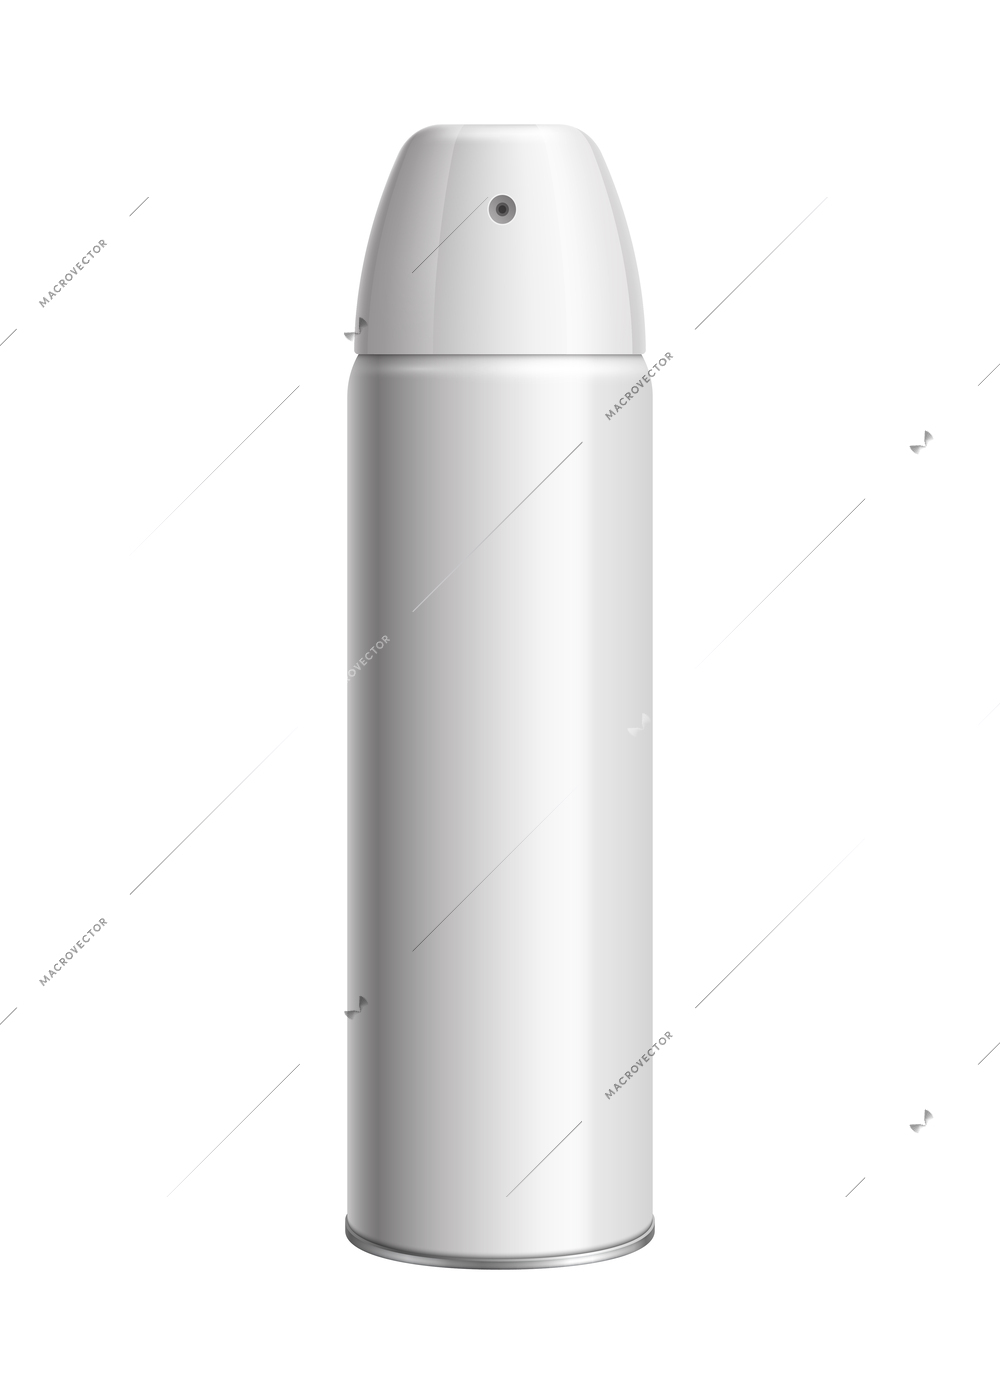 Realistic blank deodorant or hair spray bottle mockup vector illustration